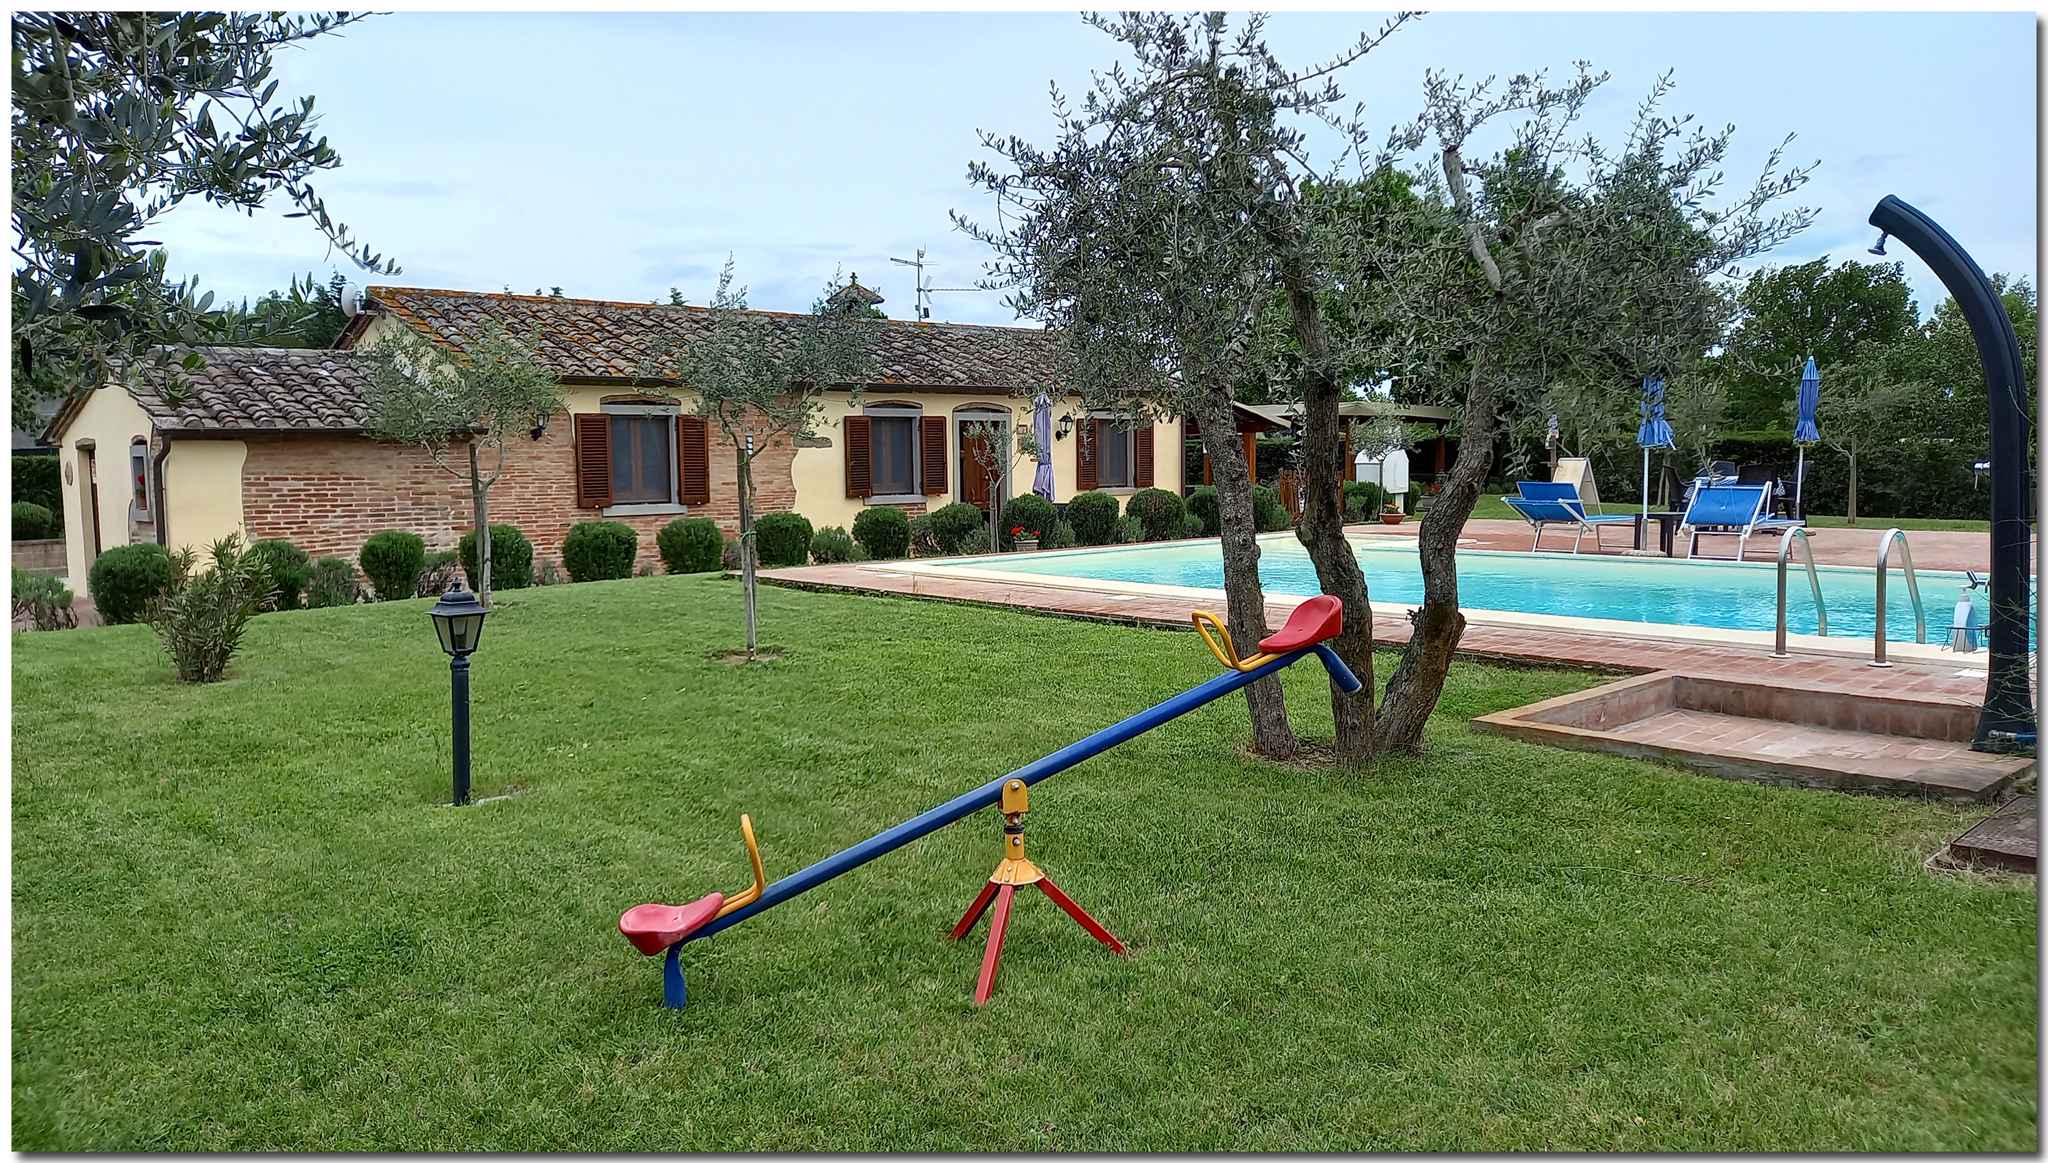 Villa mit Swimmingpool, WLAN und Klimaanlage im He Ferienhaus  Toskana